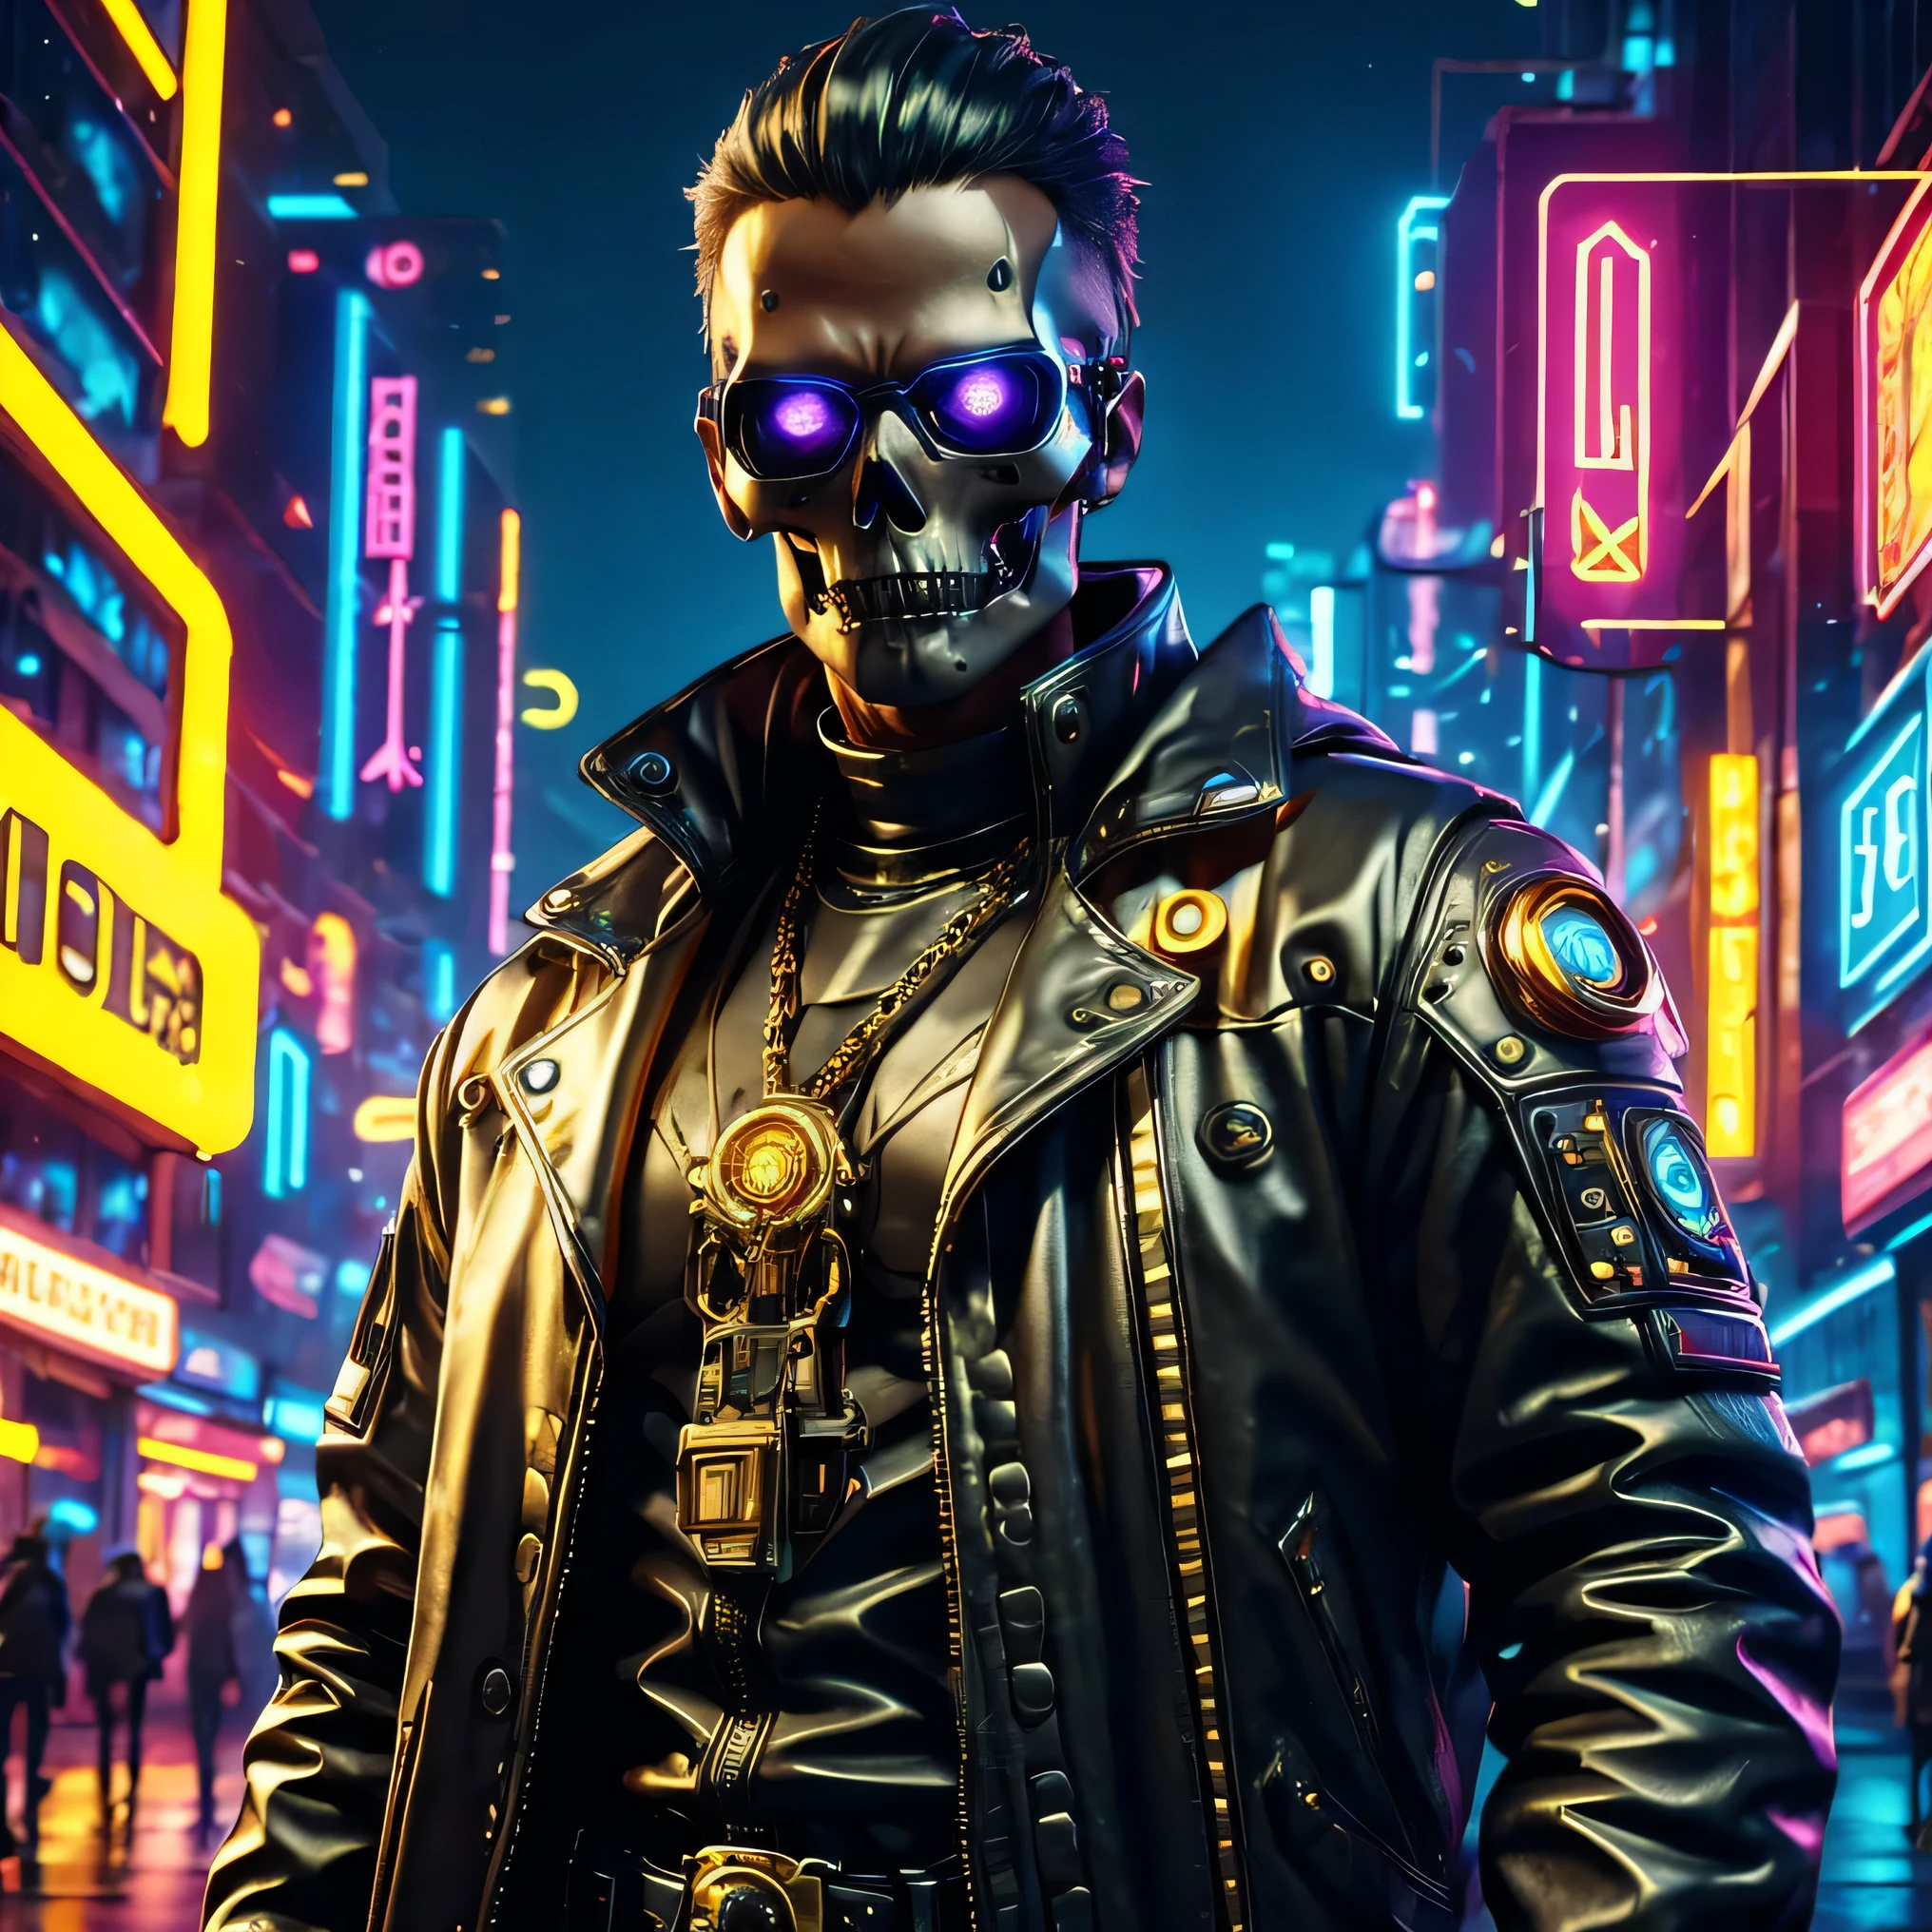 Machine, Cyberpunk, Black Leather Coat, Gold Chain, Skull Head, High-Beam Eyes, high-res portrait, Full Body, fantasy, vibrant colors, soft lighting, 3D, HDR, Very Detailed, HD, 8K genuine, Masterpiece, Background, Cyberpunk City, RTX